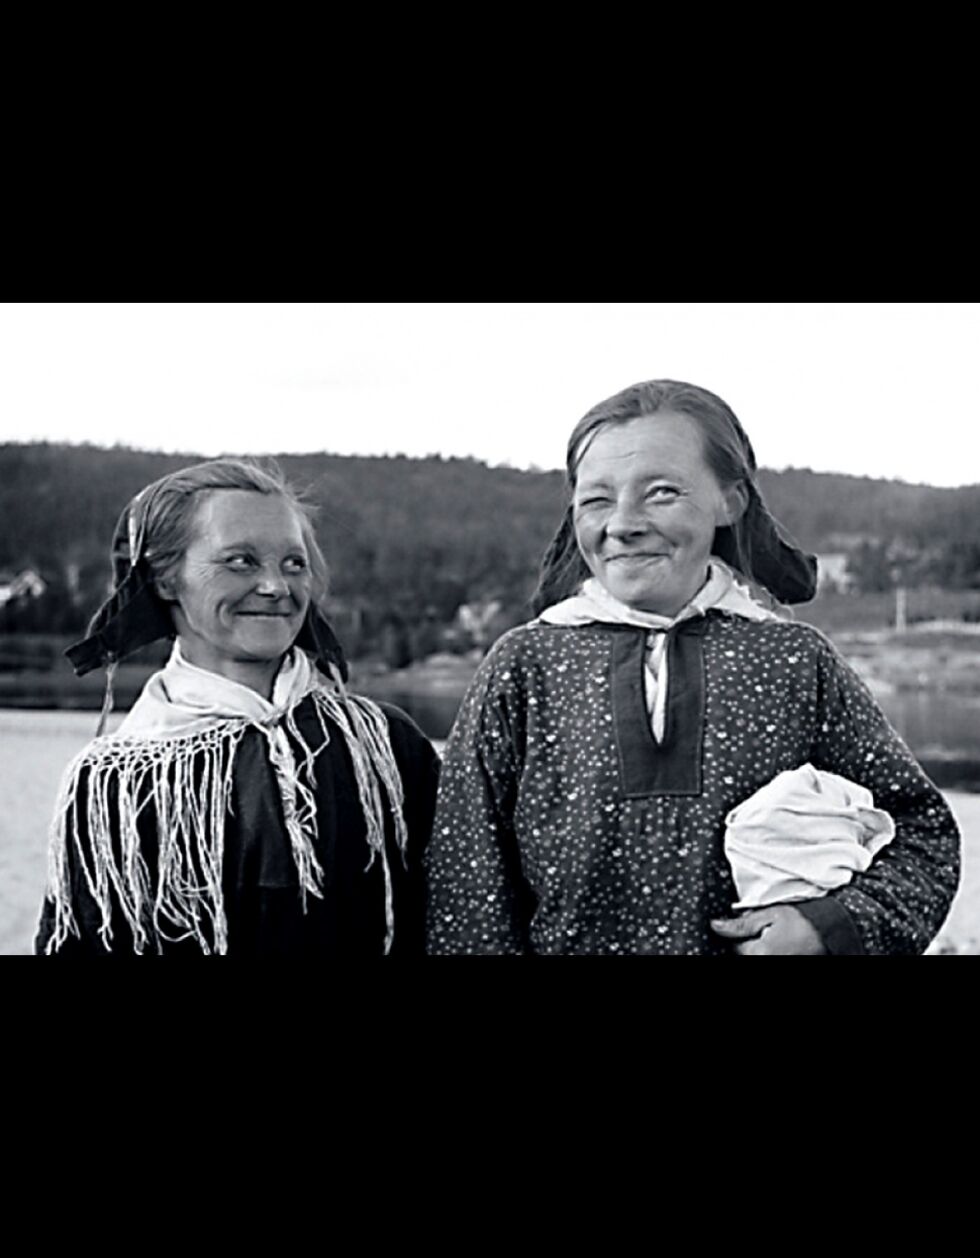 Forsidebildet på jubileumsårboka viser de to blide søstrene Marit Persdatter Sara, gift Aslaksen (til venstre) og Ellen Persdatter Sara, gift Mosesen.
 Foto: Elisabeth Meyer på 1940-tallet, utlånt fra Finnmark fylkesbibliotek